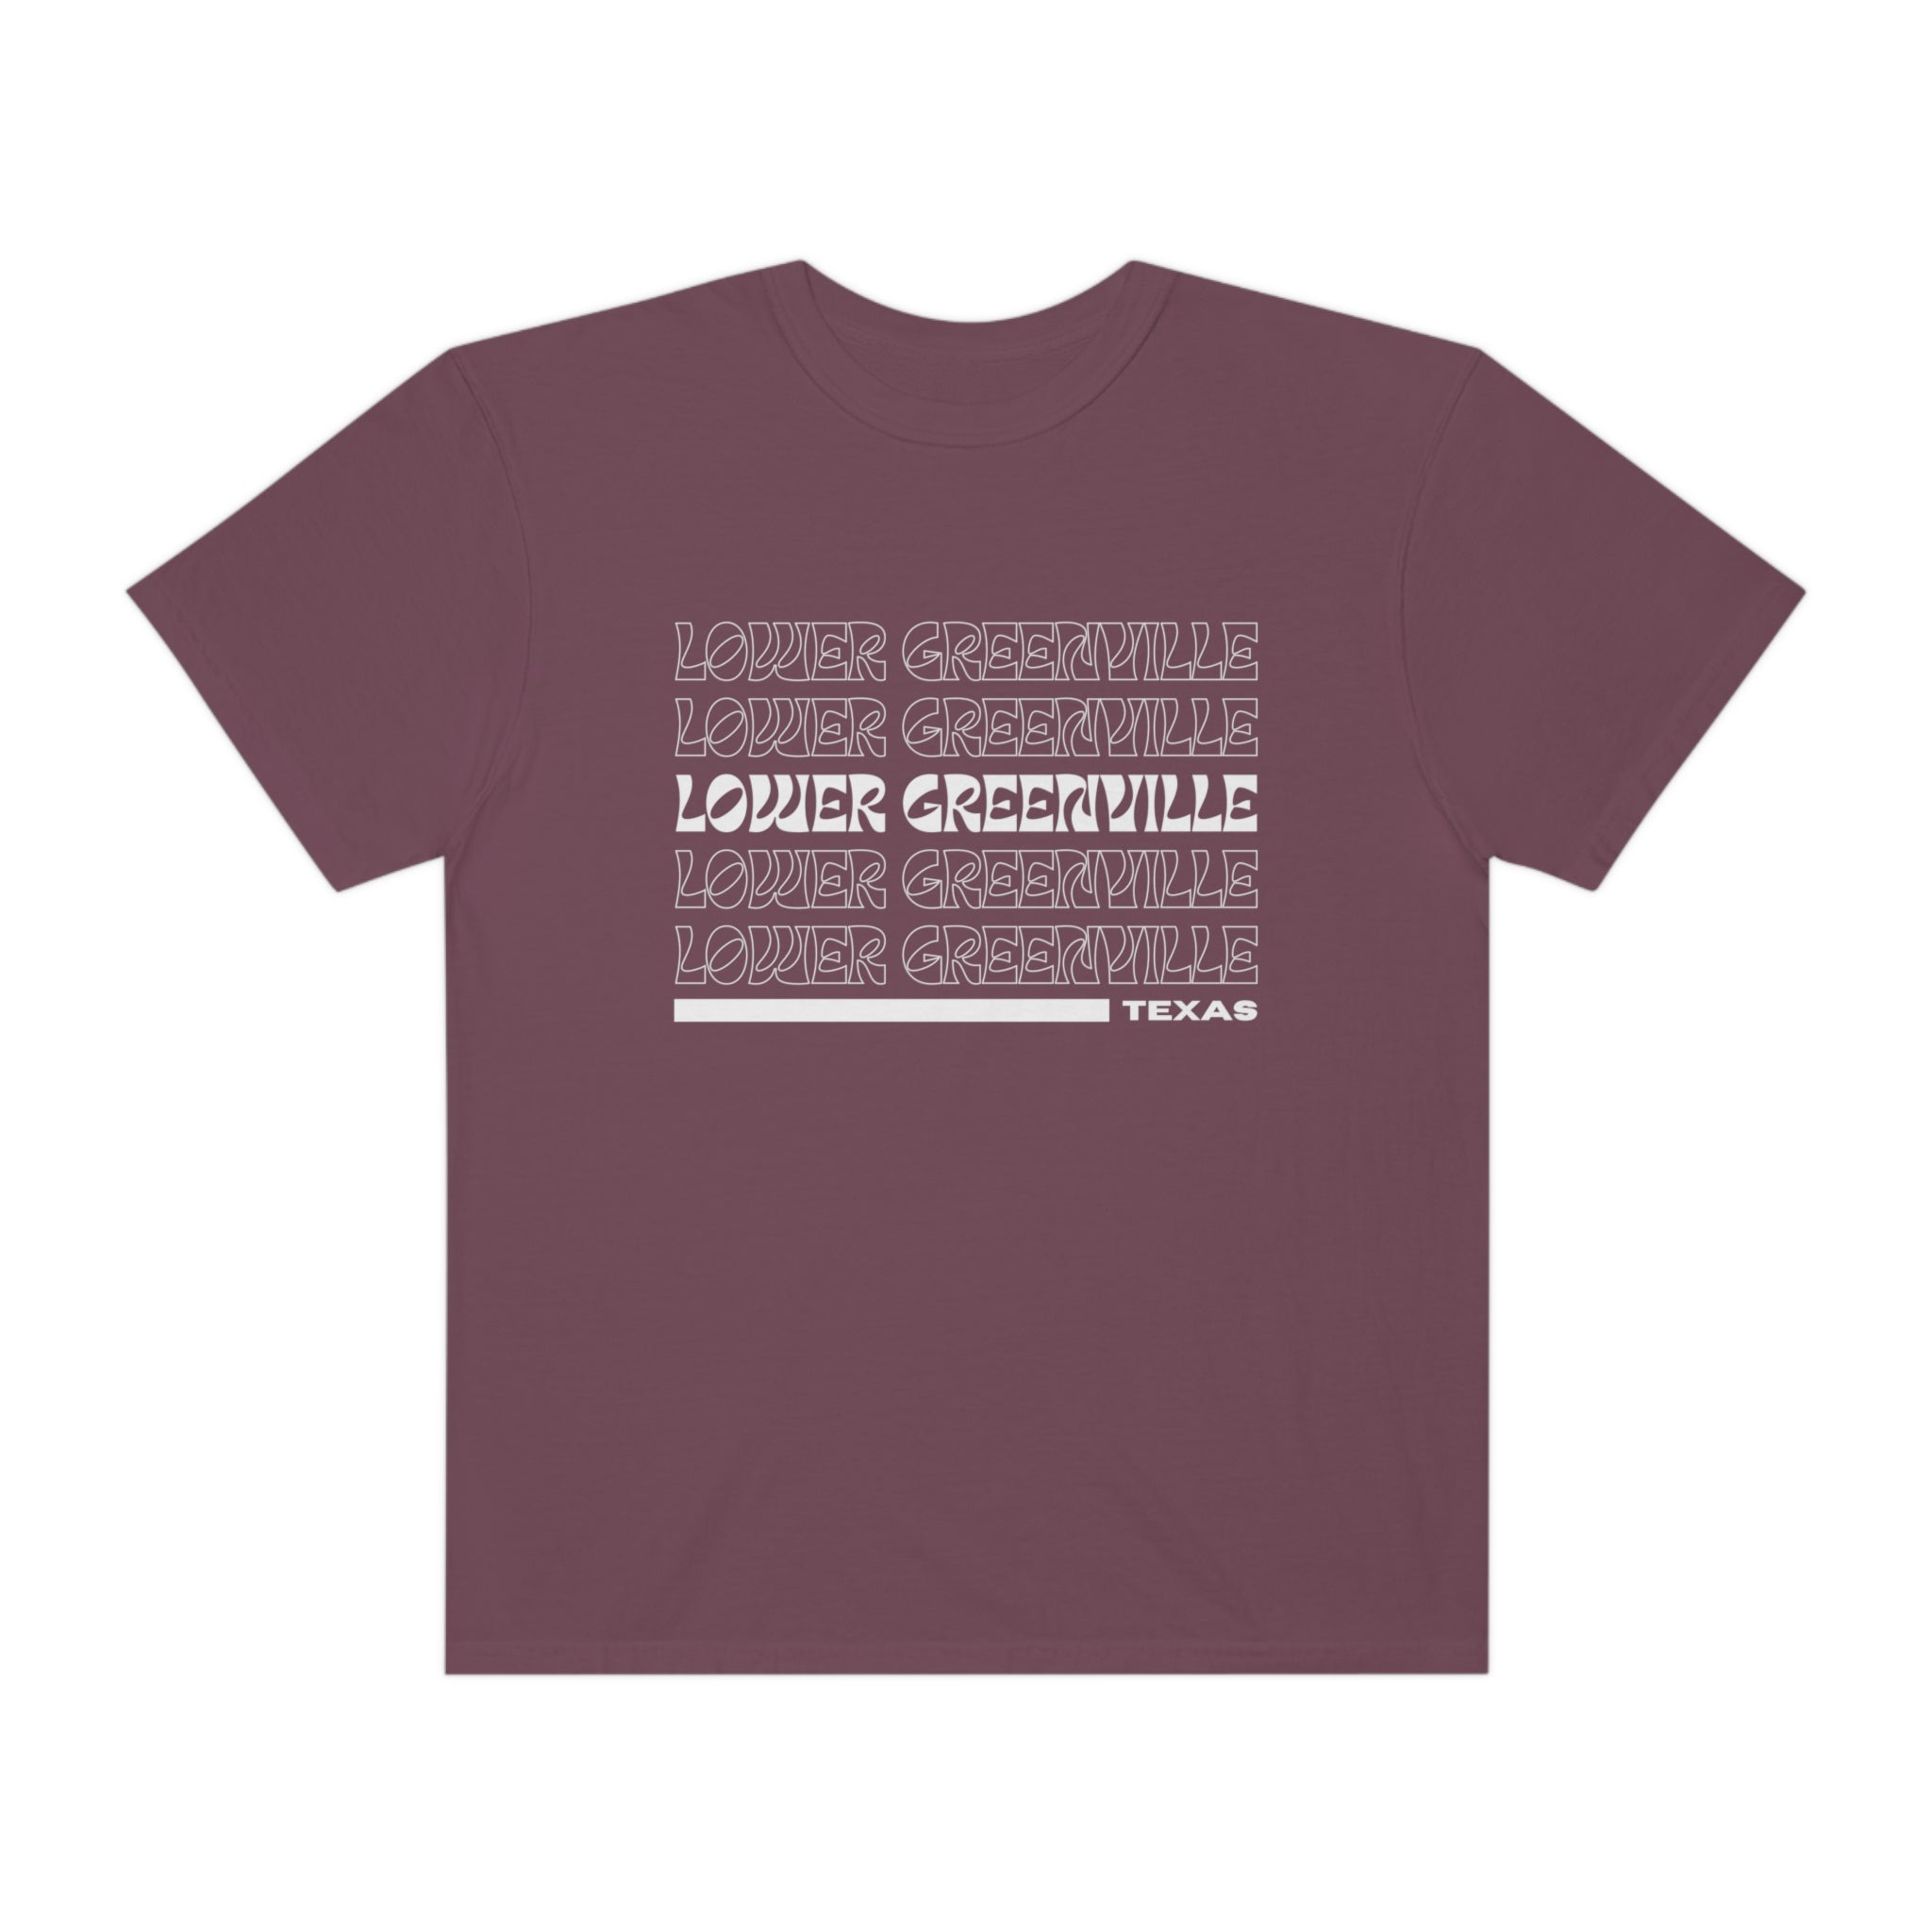 Retro Vibe Lower Greenville T-shirt - Friends of Lower Greenville